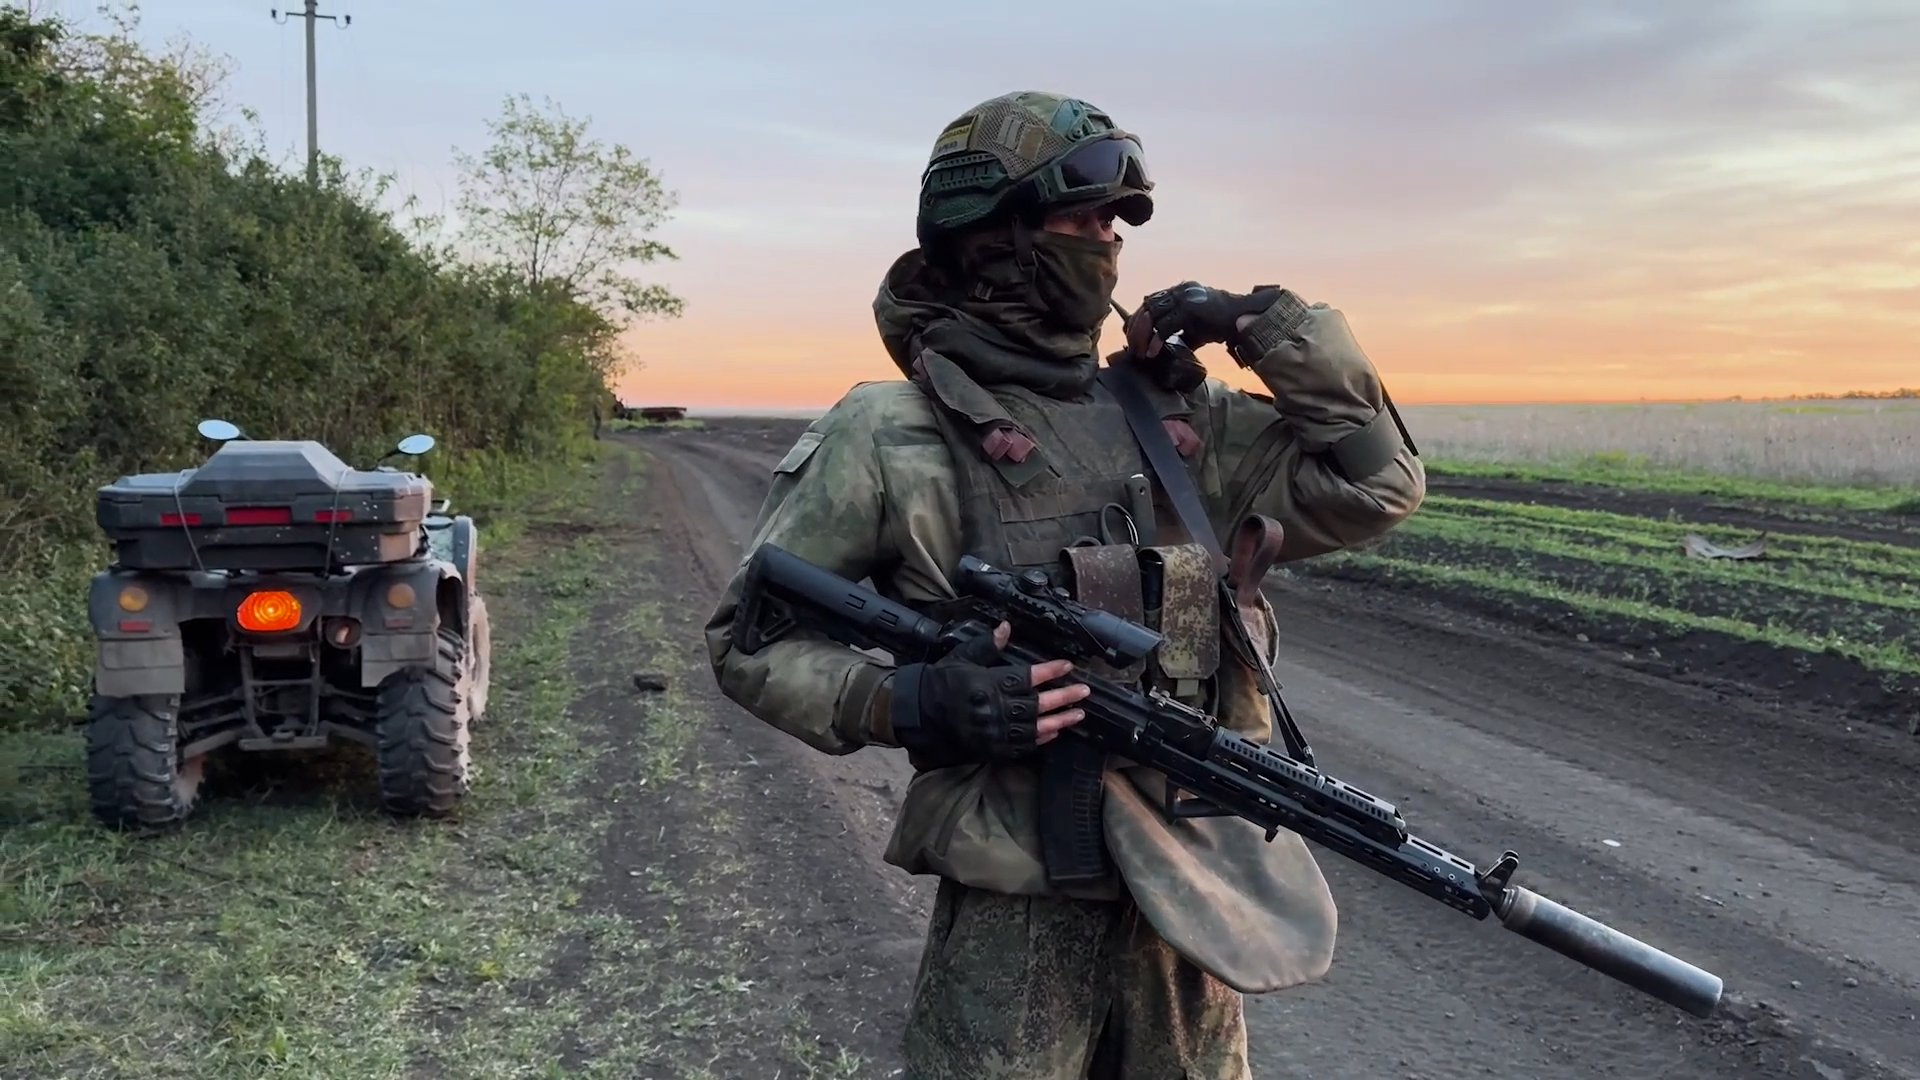 Гоняют на манёвренных багги и квадроциклах: как проходят бои на границе Харьковской области и ЛНР